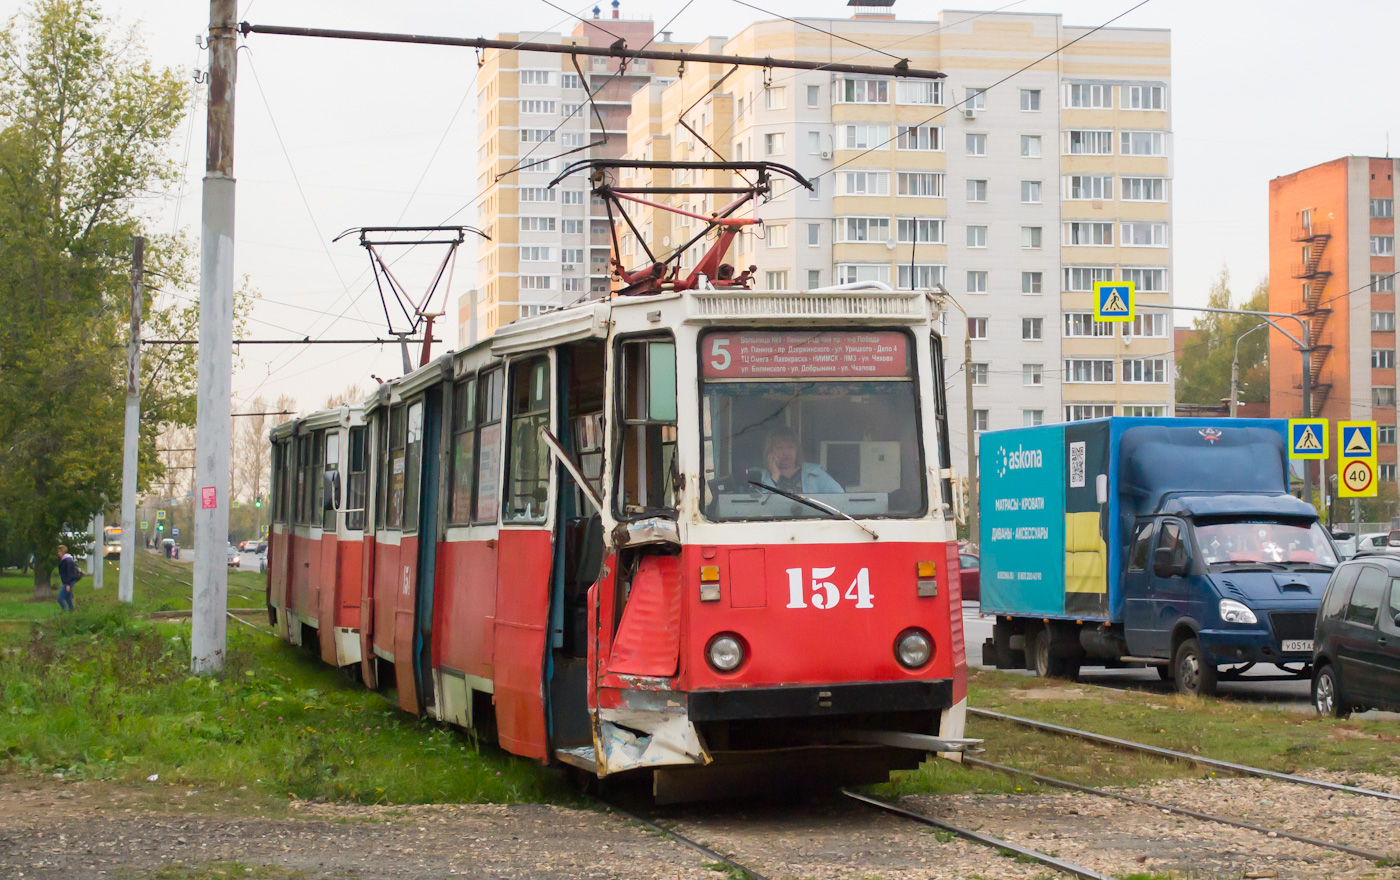 Yaroslavl, 71-605 (KTM-5M3) nr. 154; Yaroslavl — Incidents